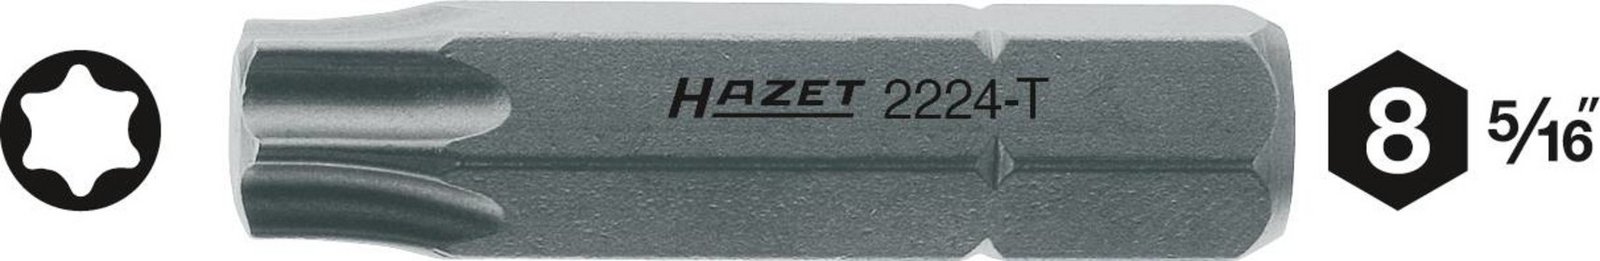 Hazet  2224-T45 bit Torx T 45 Speciální ocel   C 8 1 ks